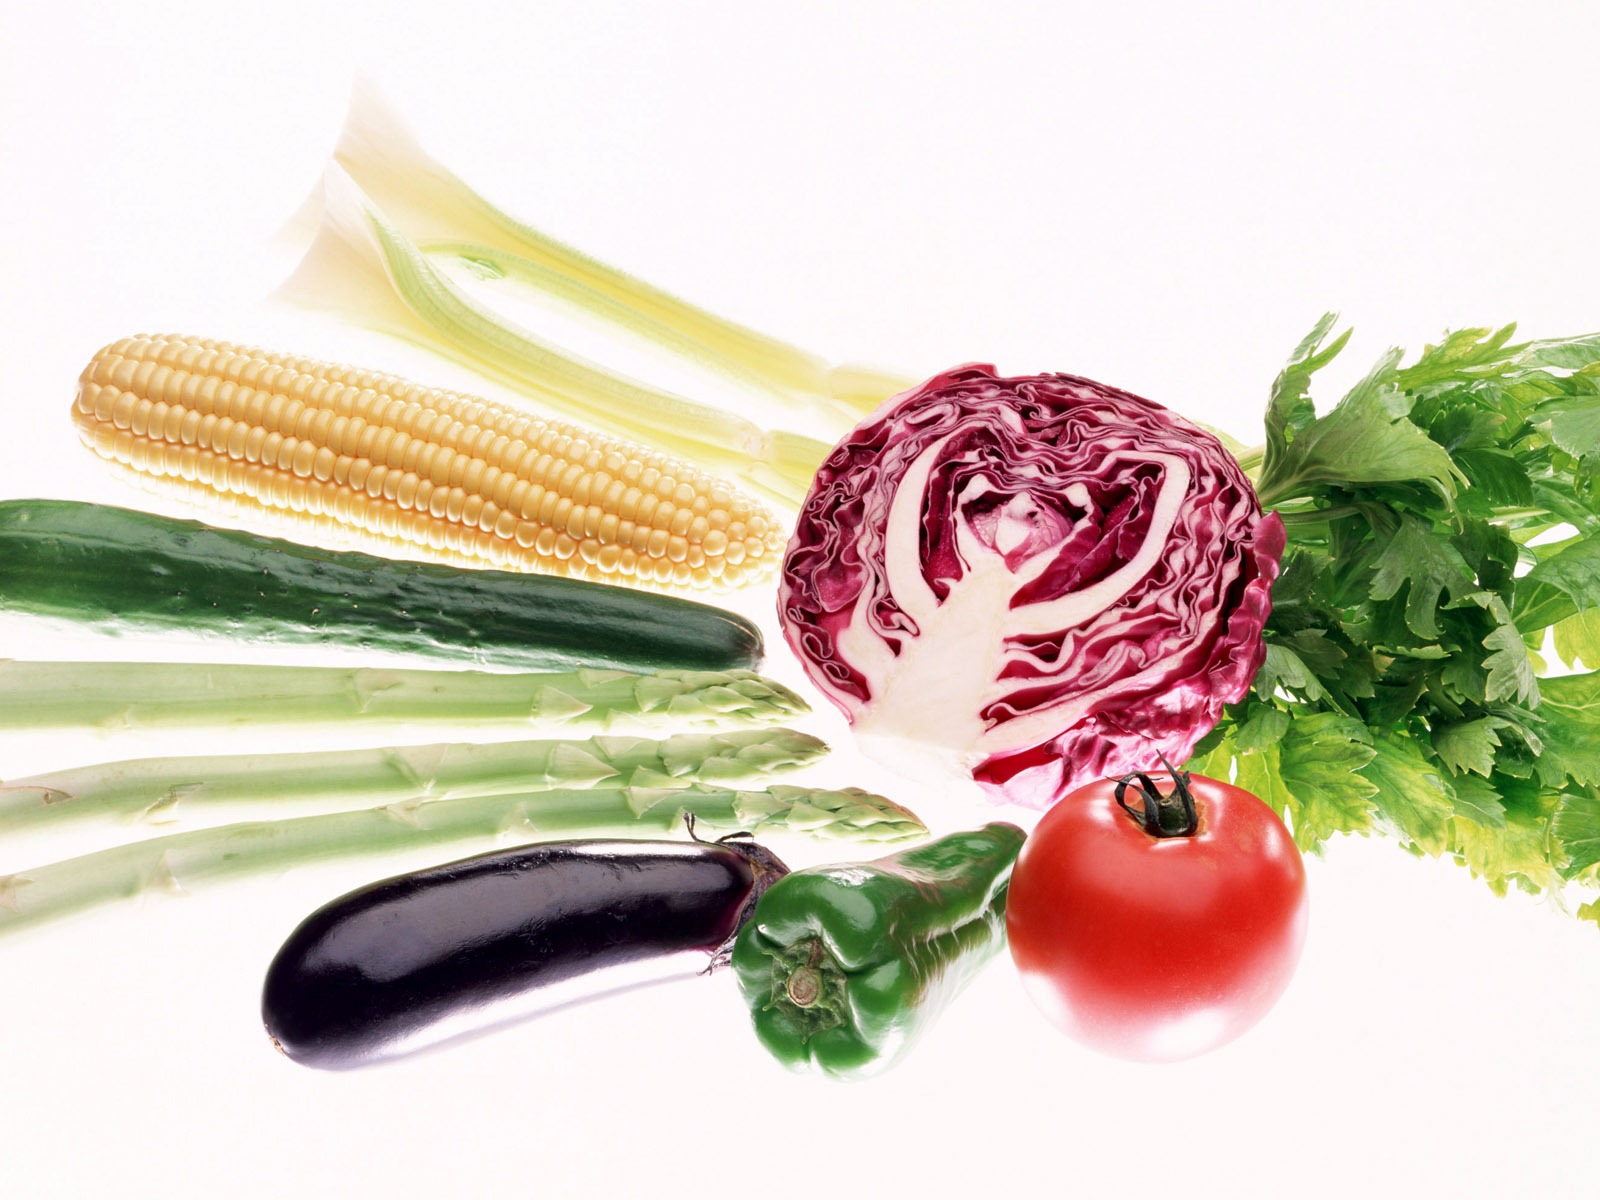 Fond d'écran photo de légumes (1) #17 - 1600x1200